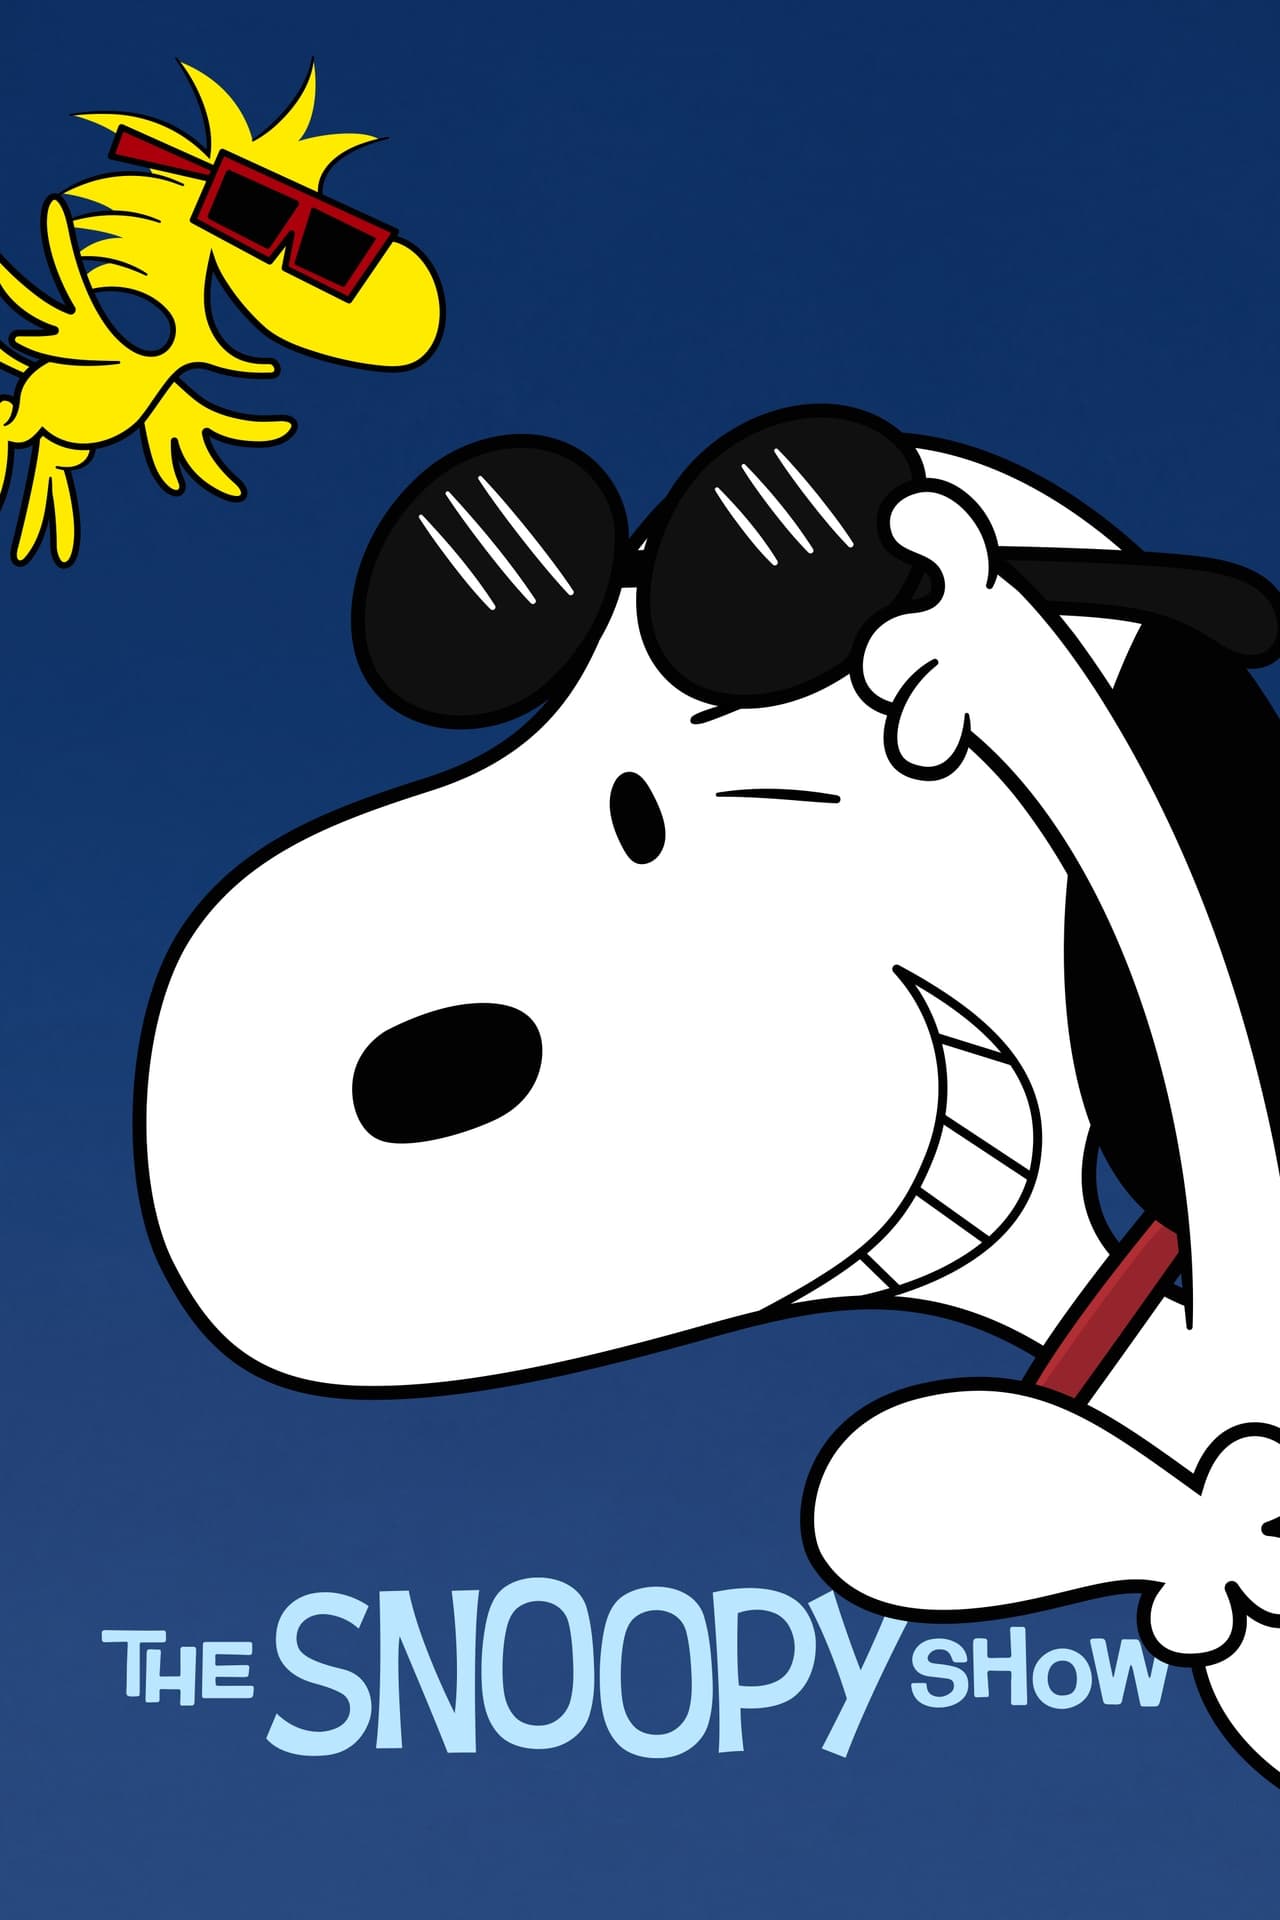 The Snoopy Show (season 2)